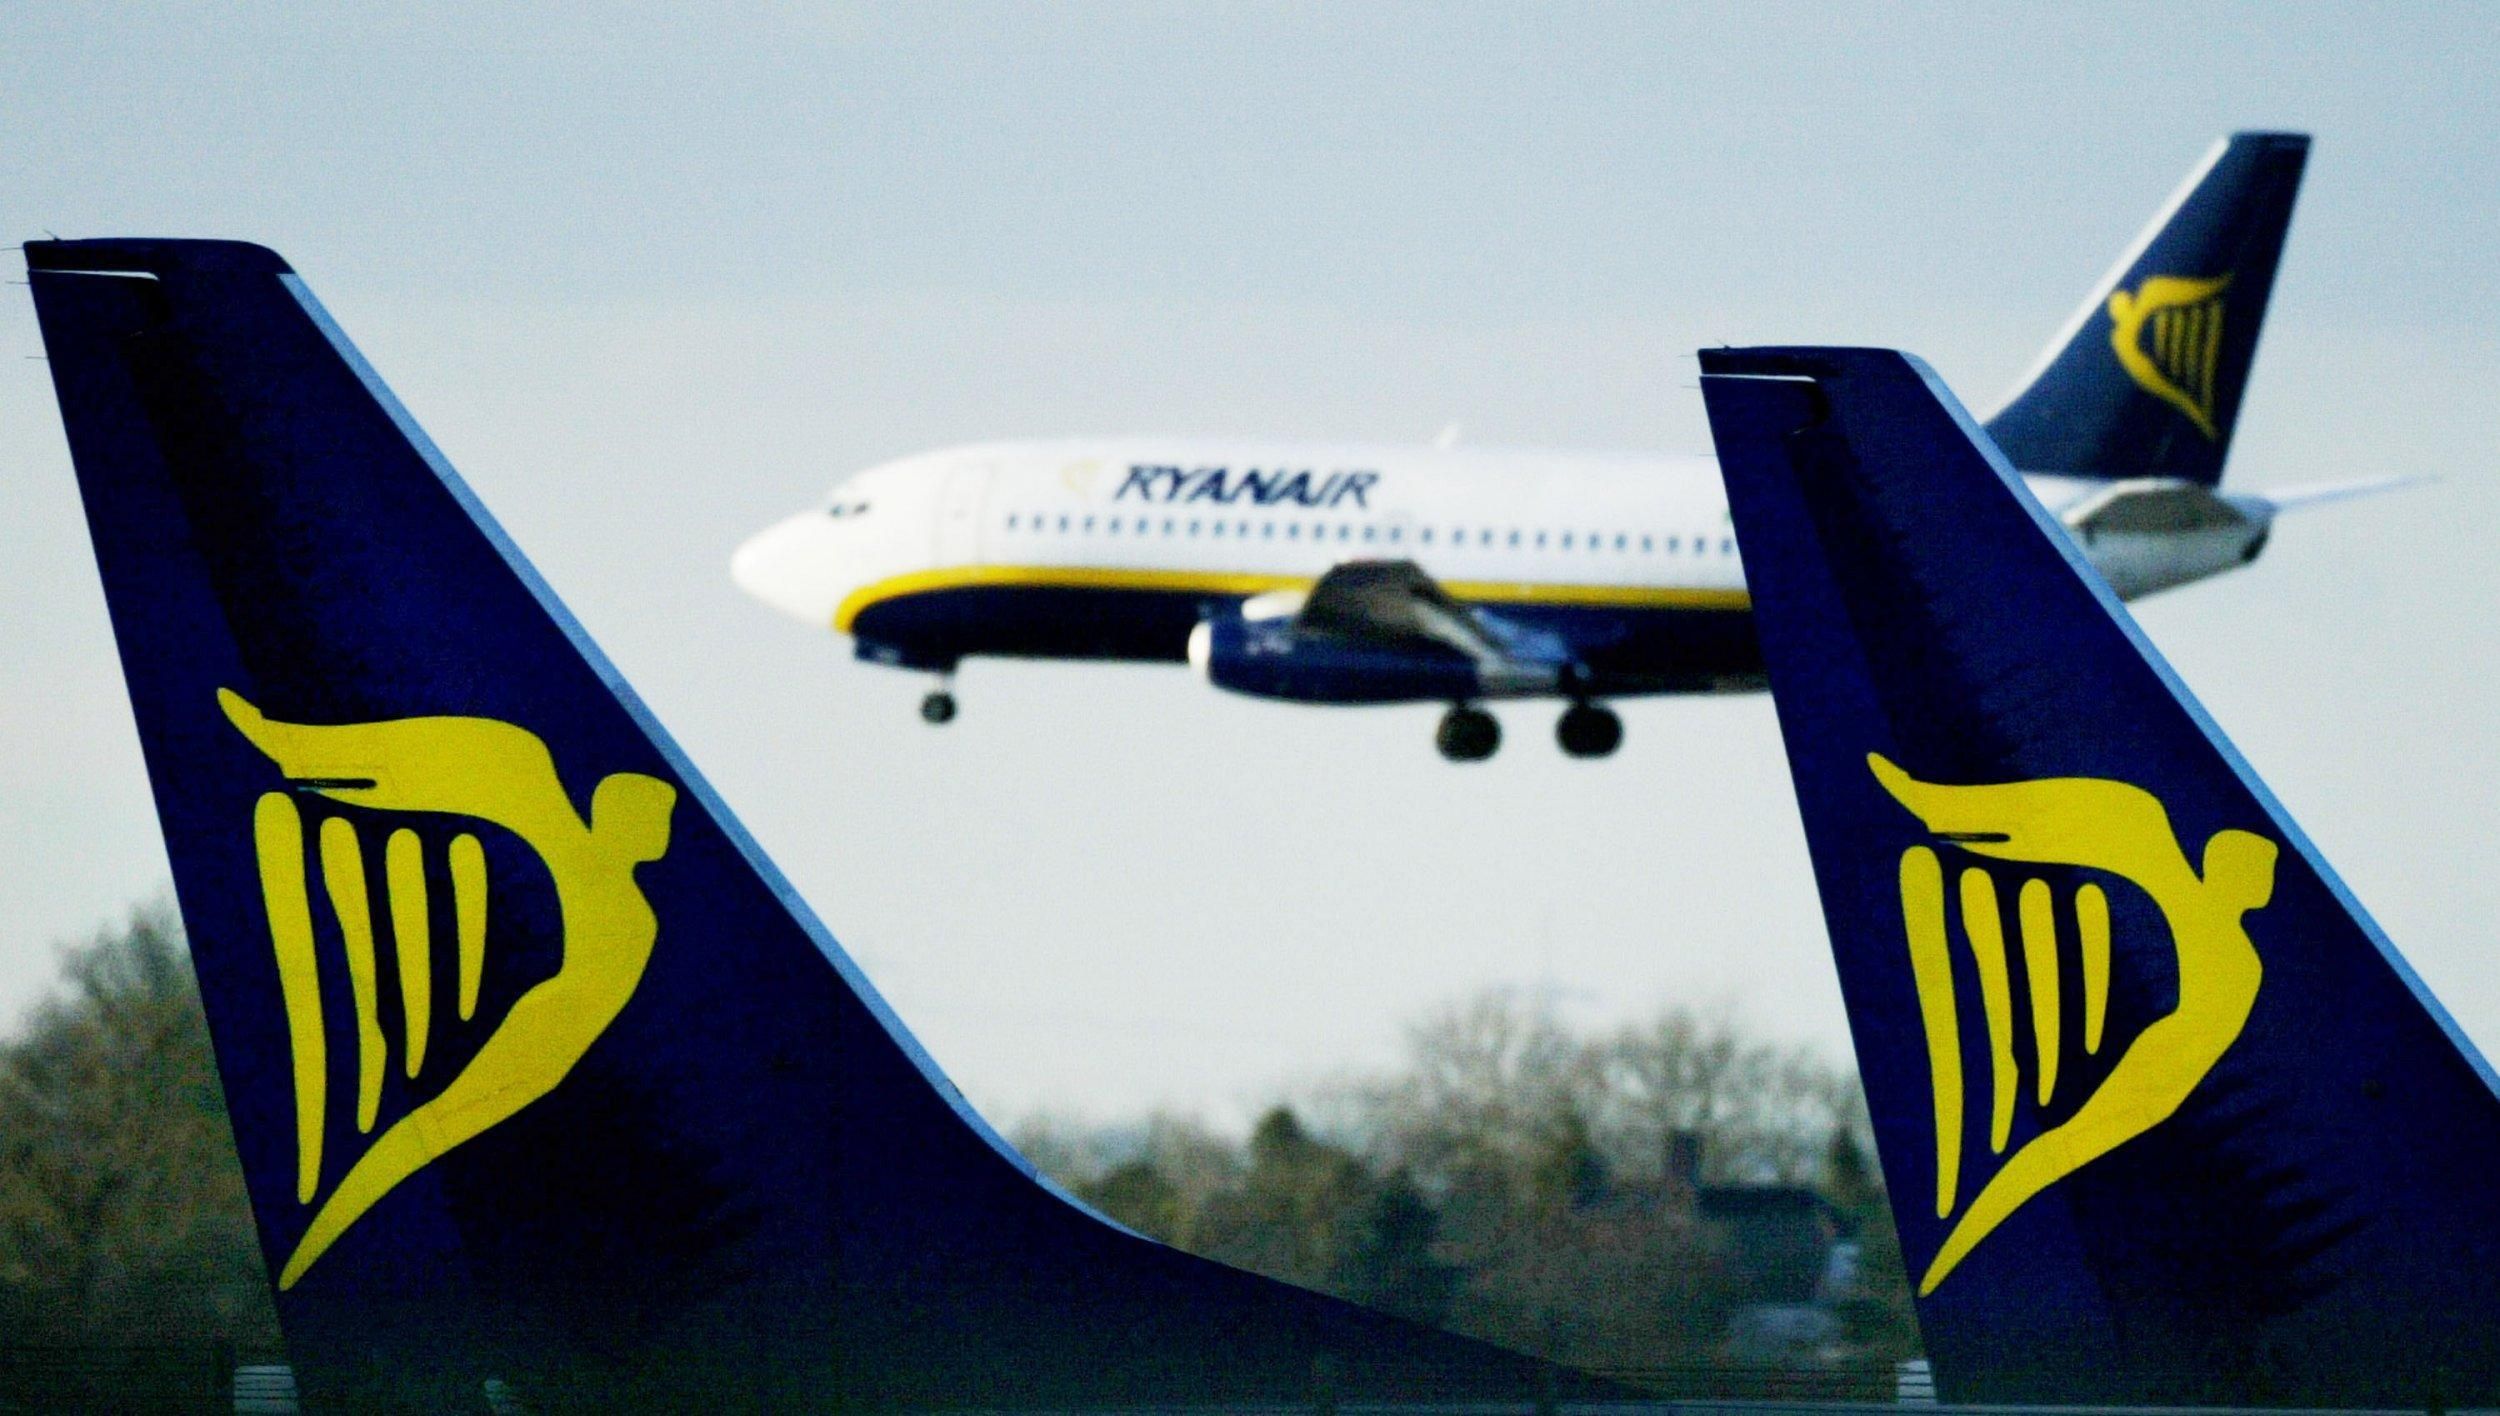 Лоукостер Ryanair объявил суточную распродажу 100 тысяч билетов по цене от 9,99 евро